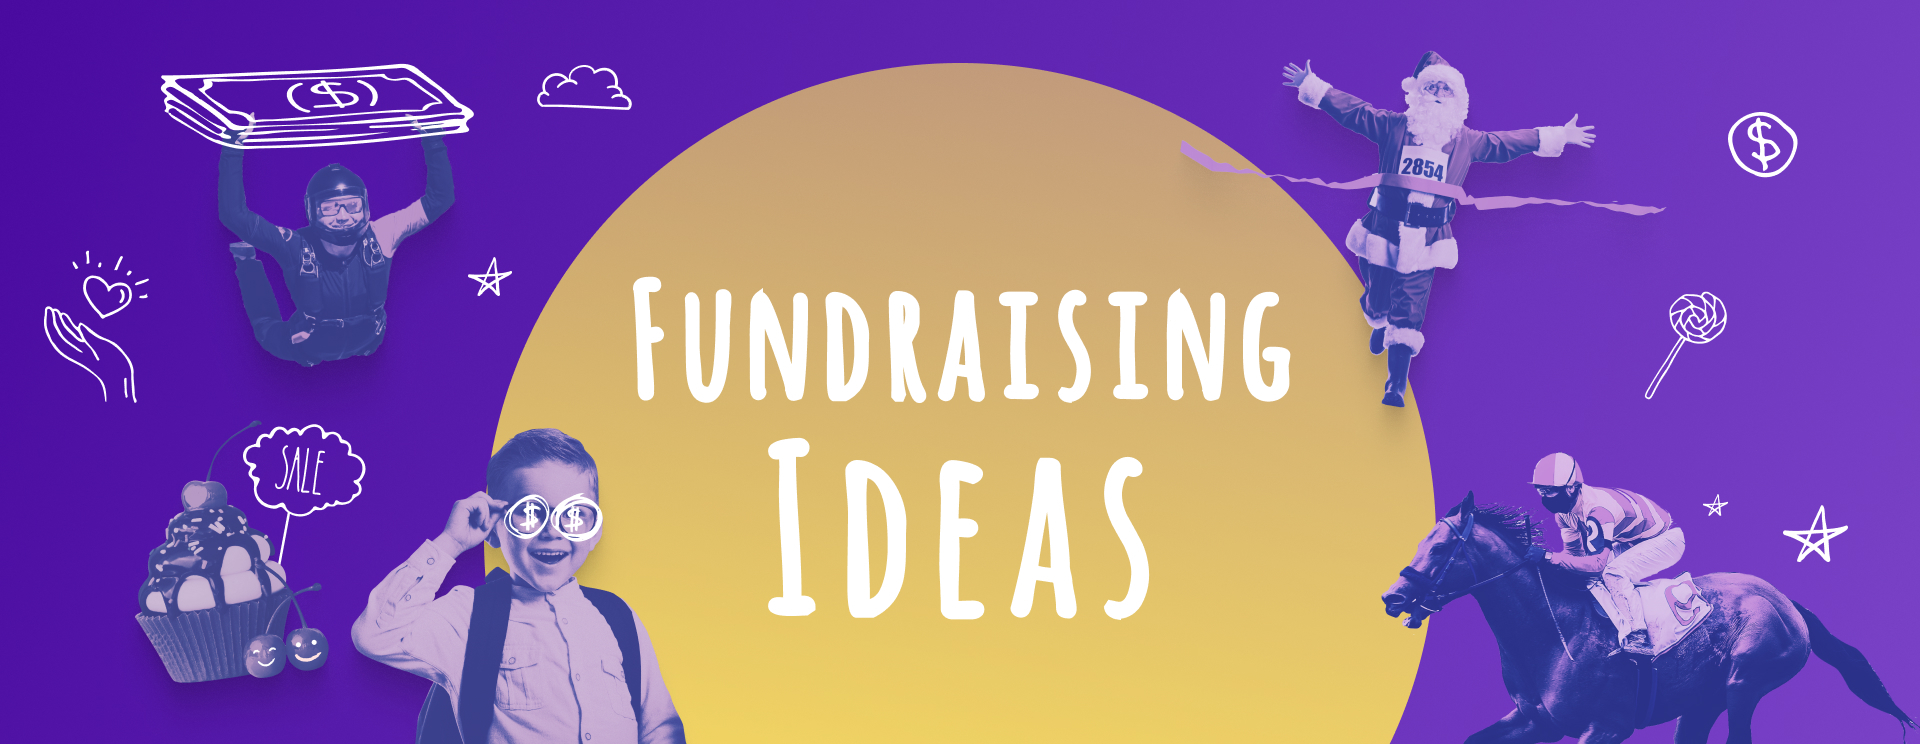 Fundraising ideas banner